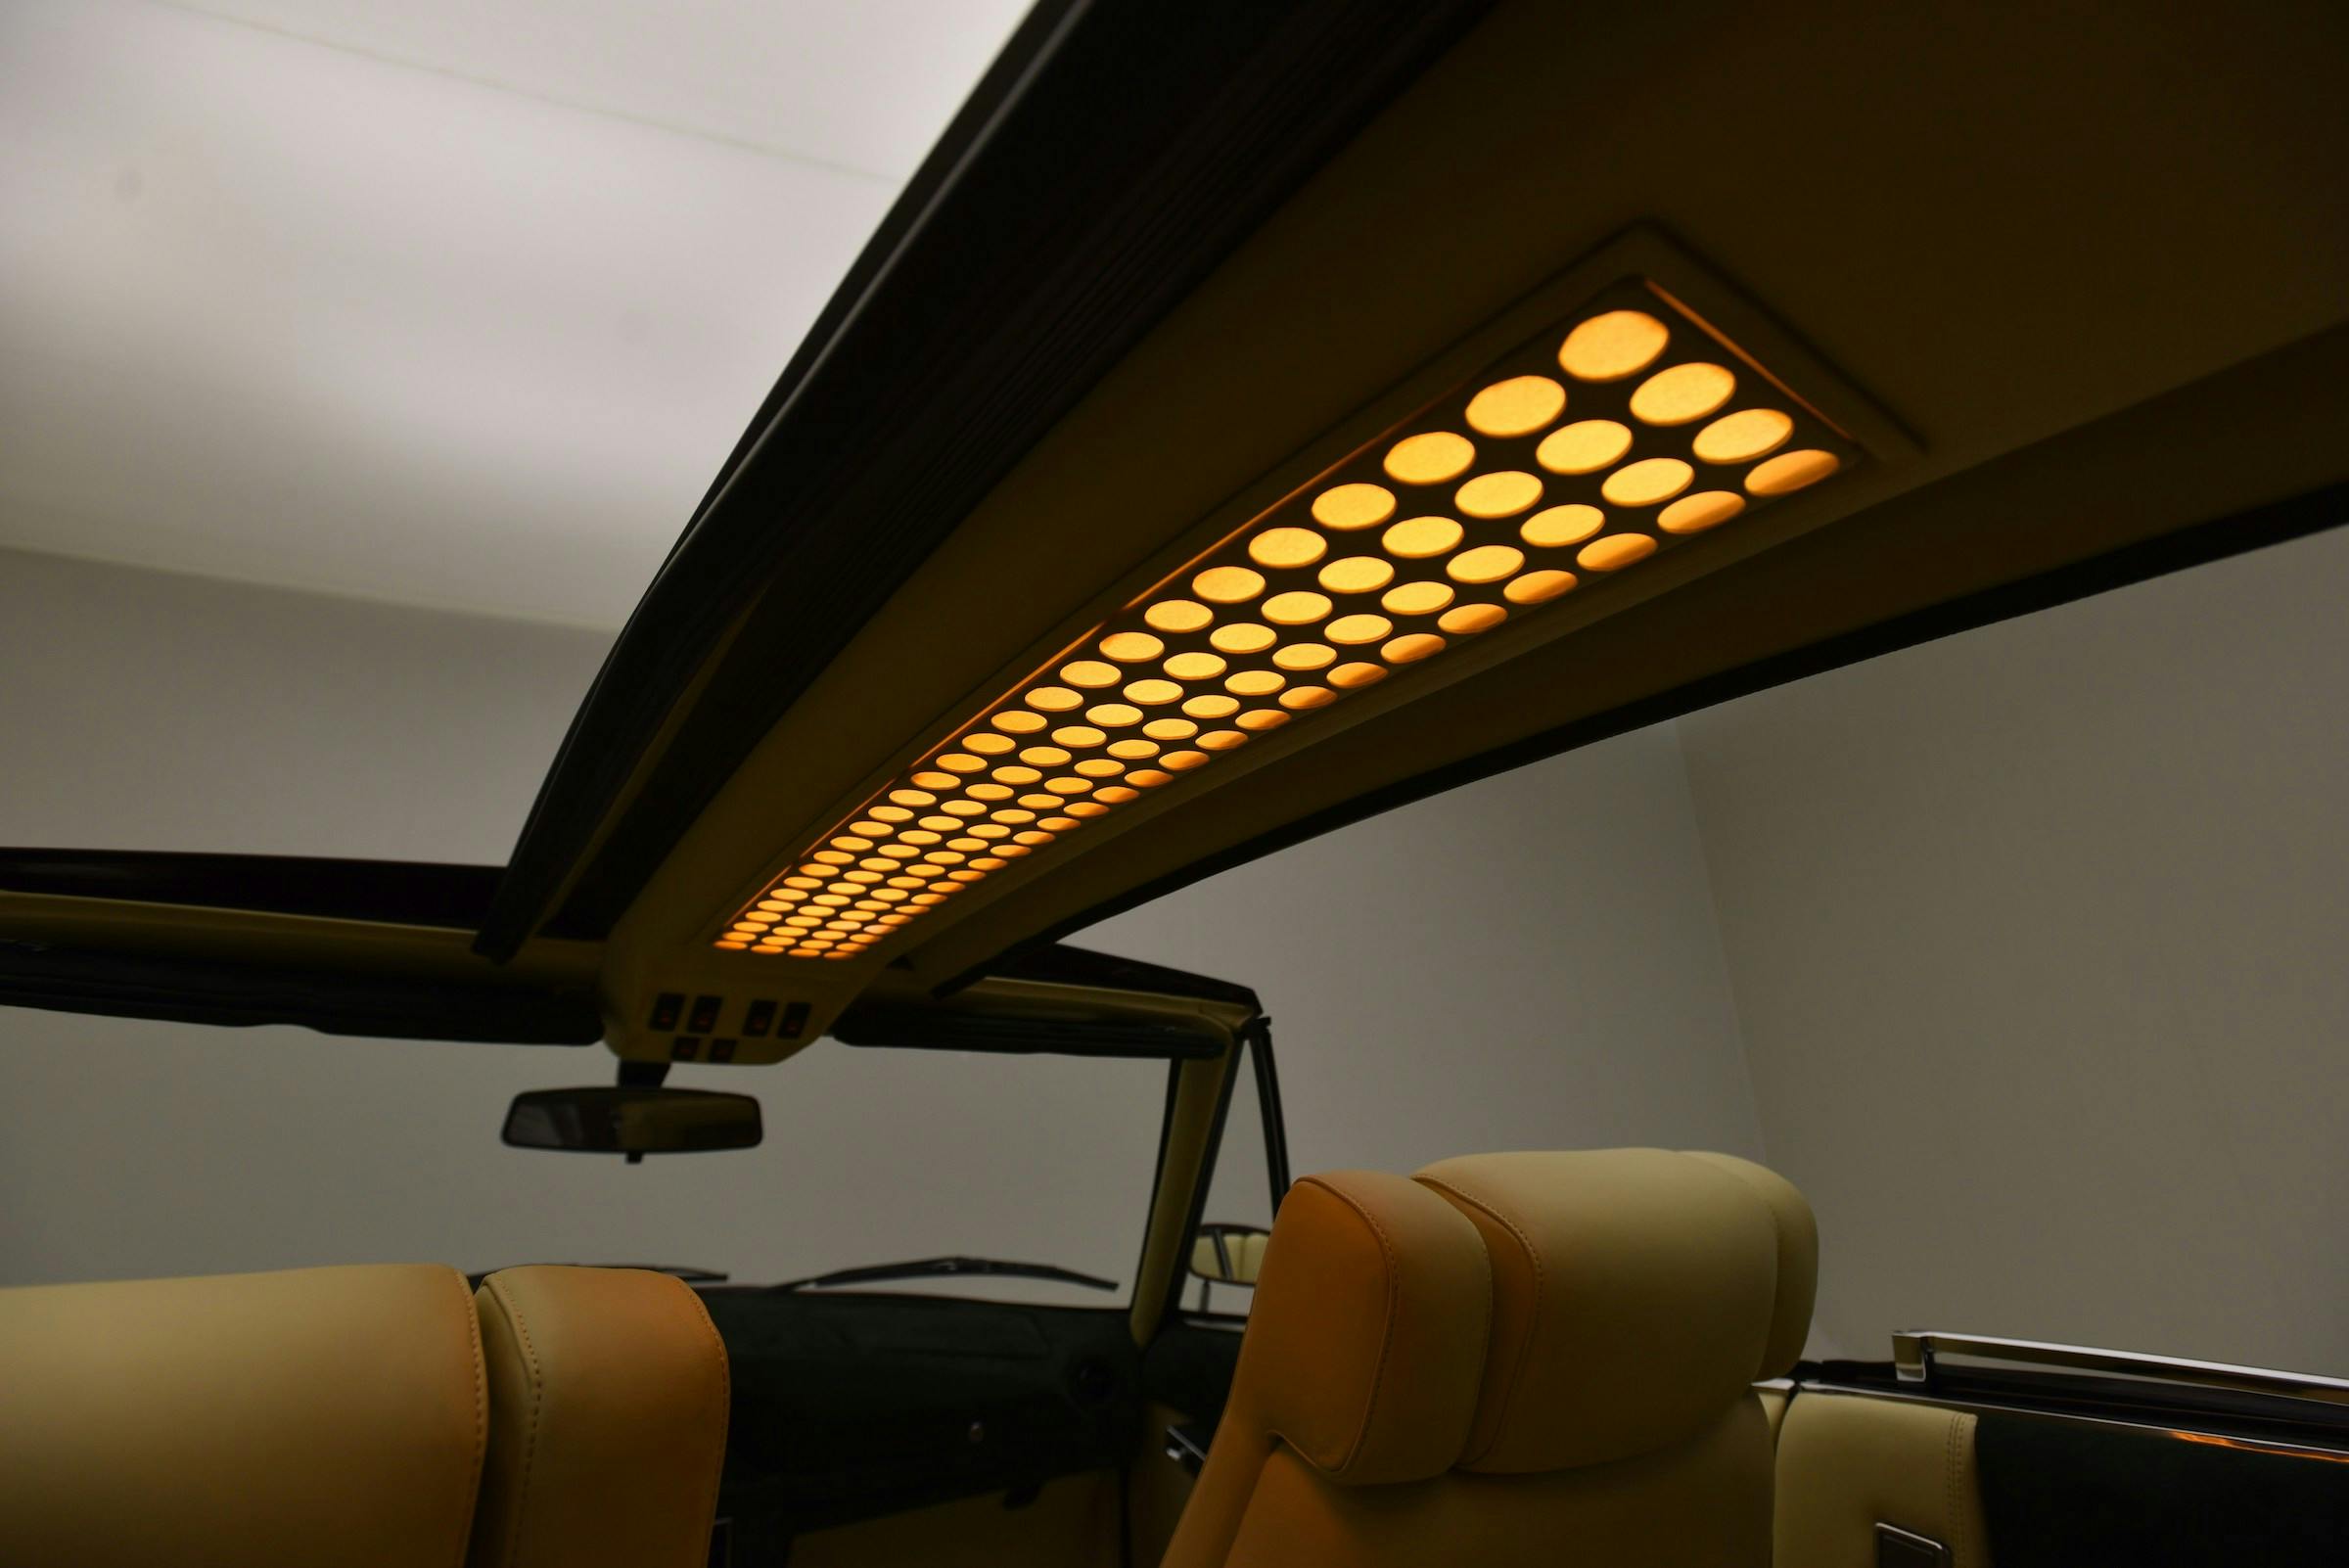 1971 Citroën SM Espace interior circle lighting